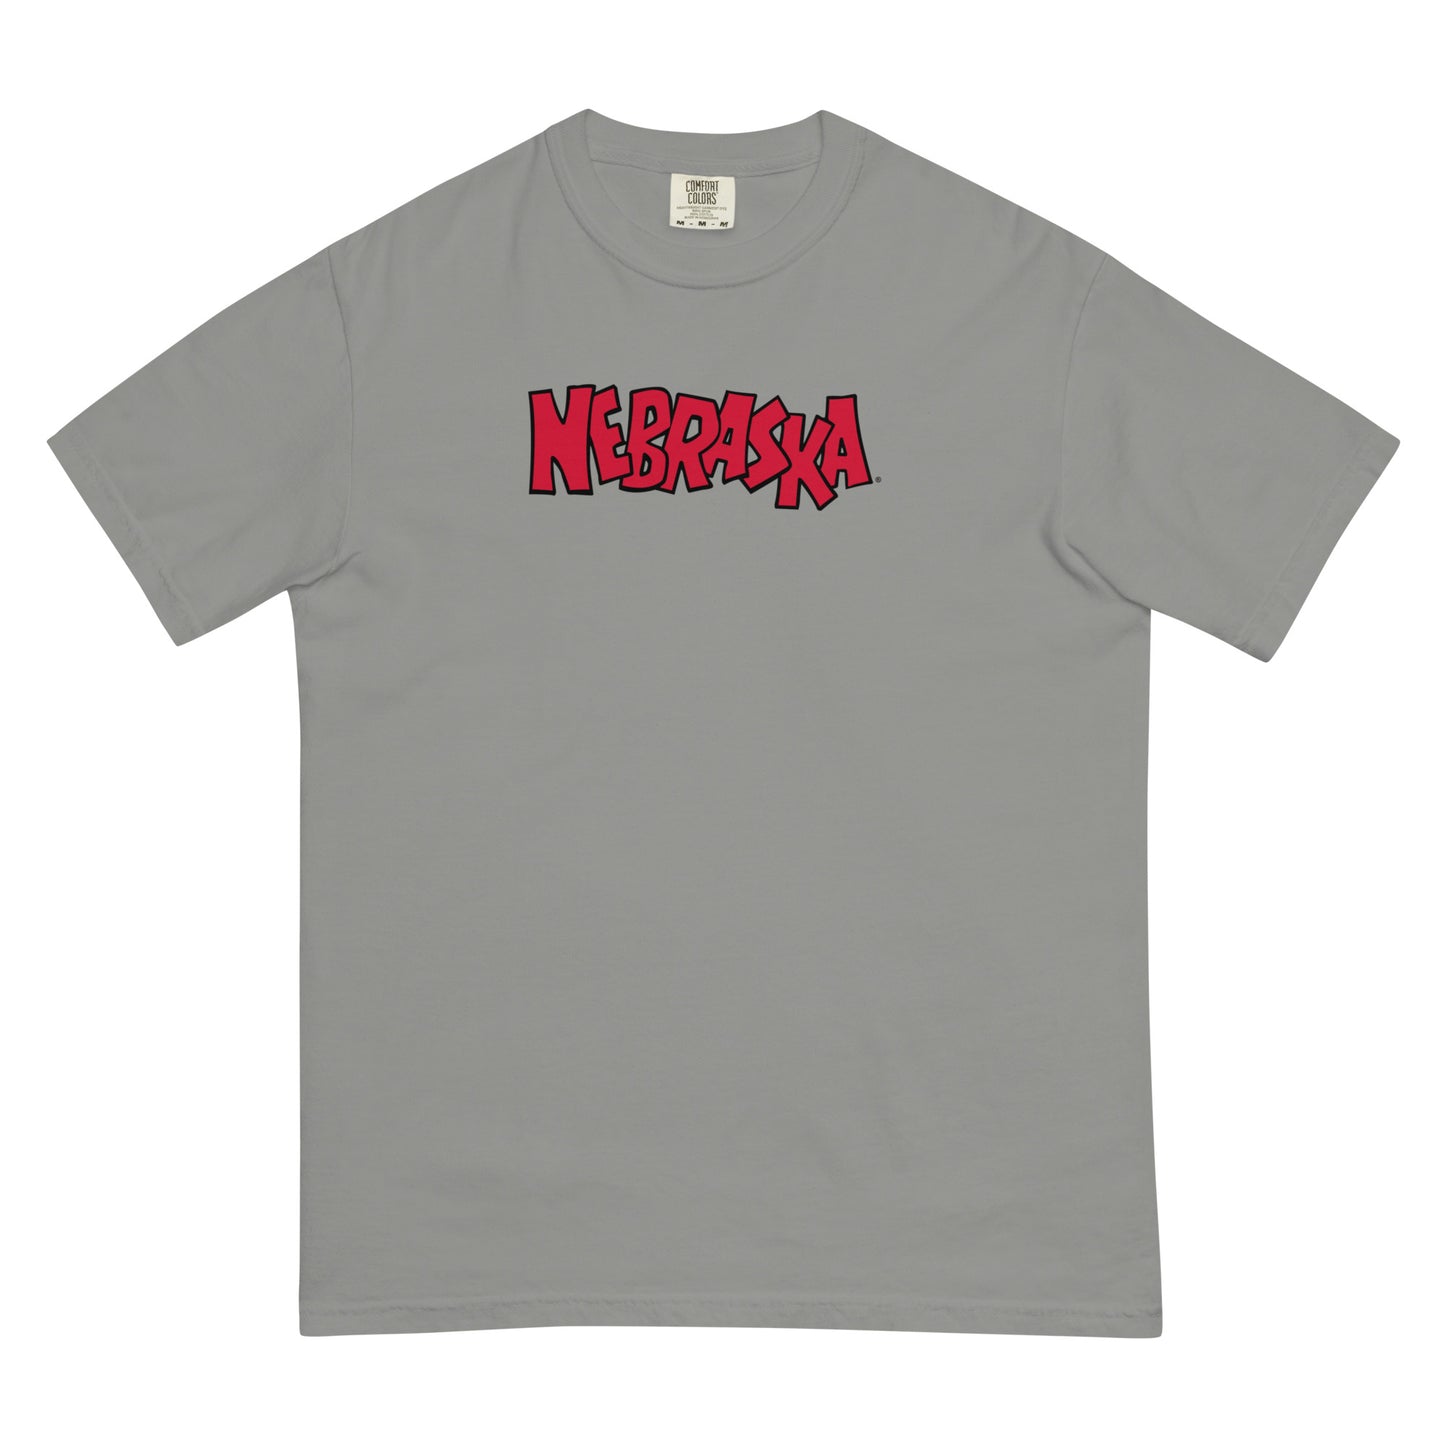 THE Nebraska Retro T-shirt